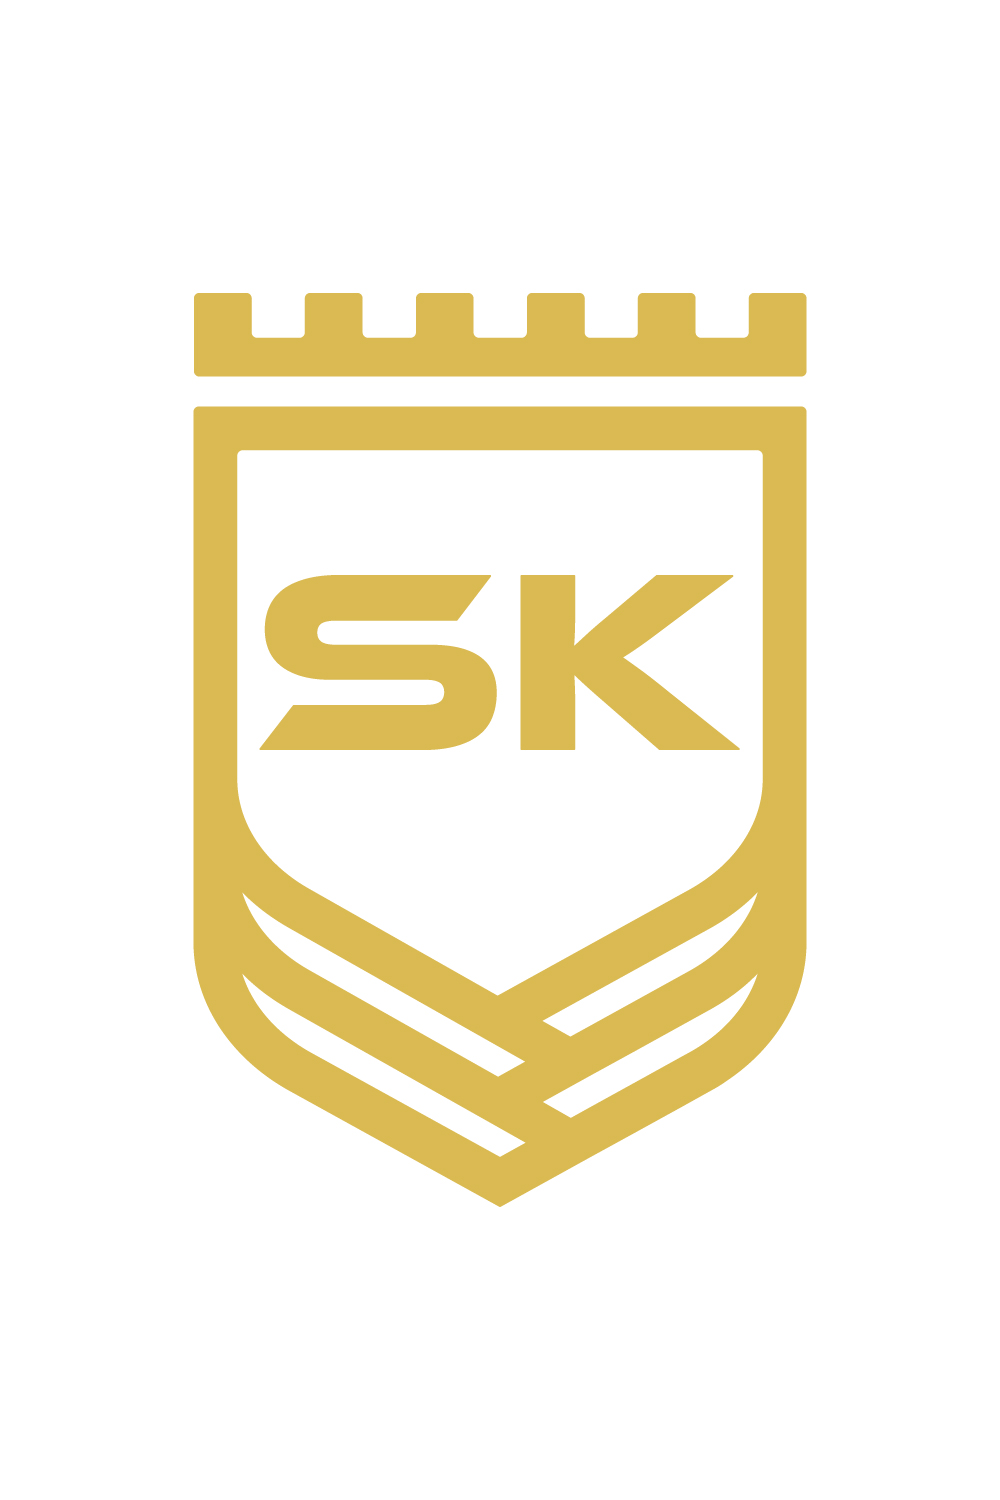 Luxury SK letters logo design vector icon KS logo Golden color best identity SK Crown logo design pinterest preview image.